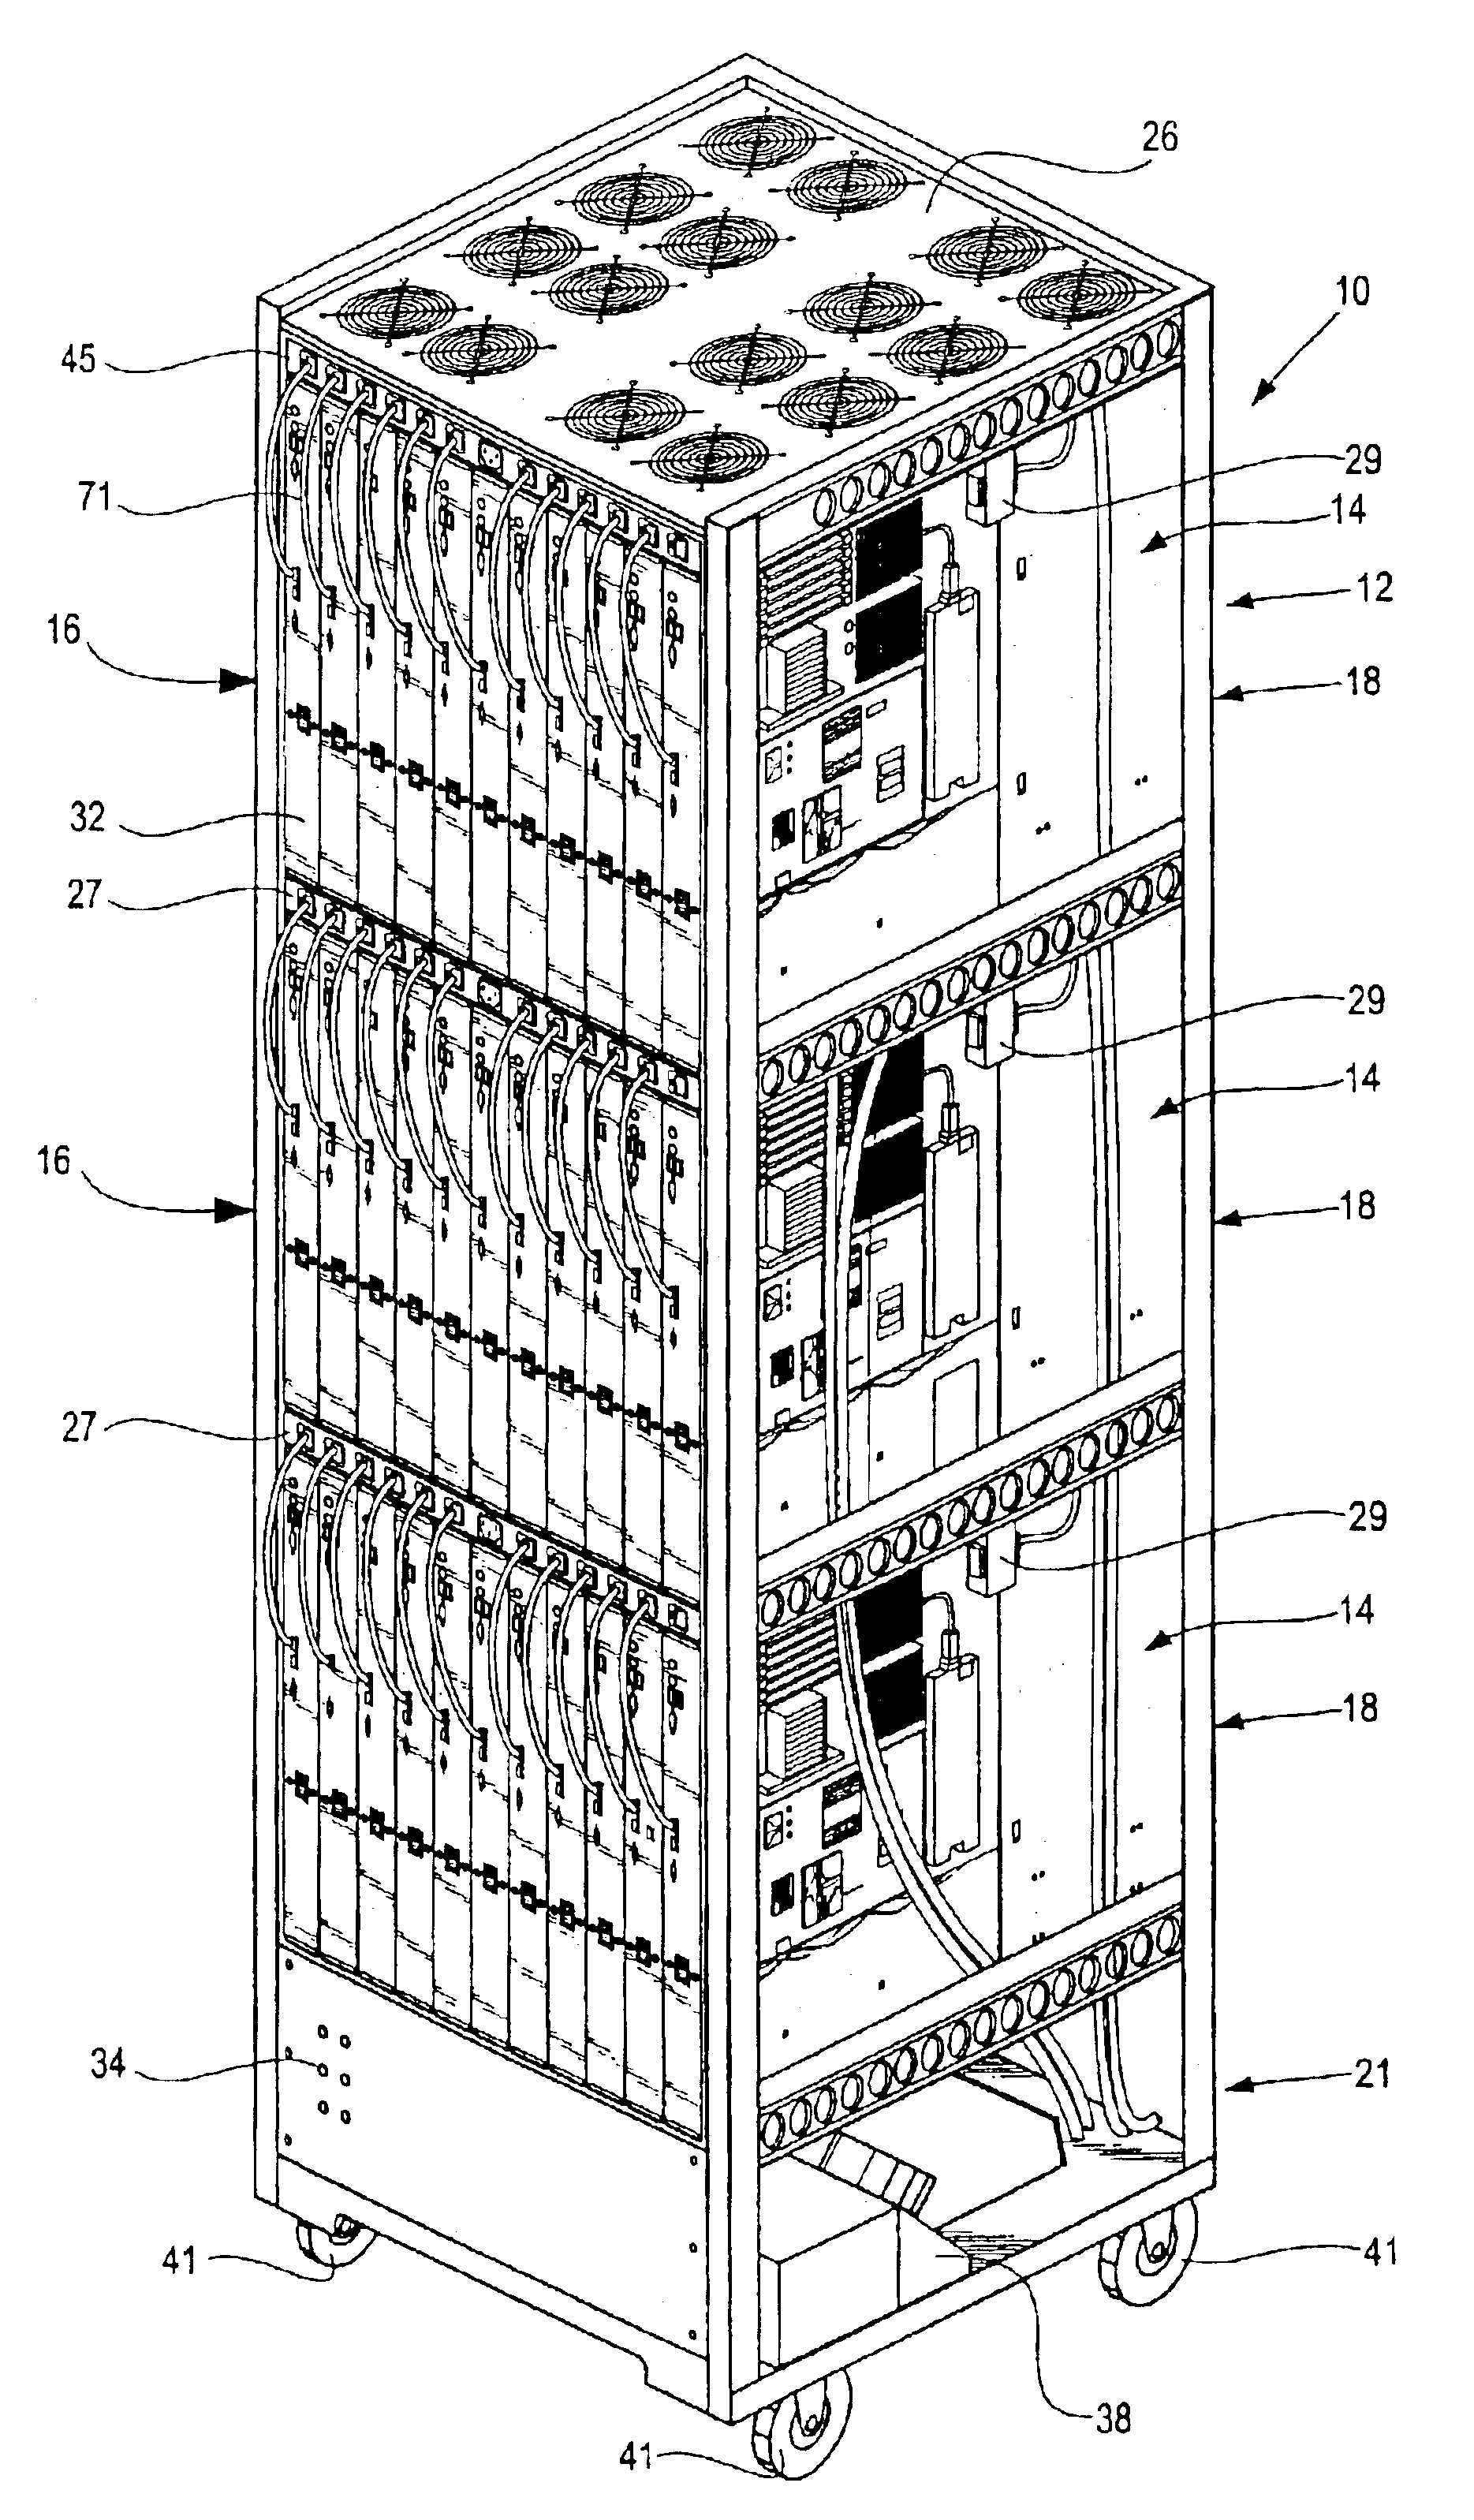 Rack mountable computer component and method of making same